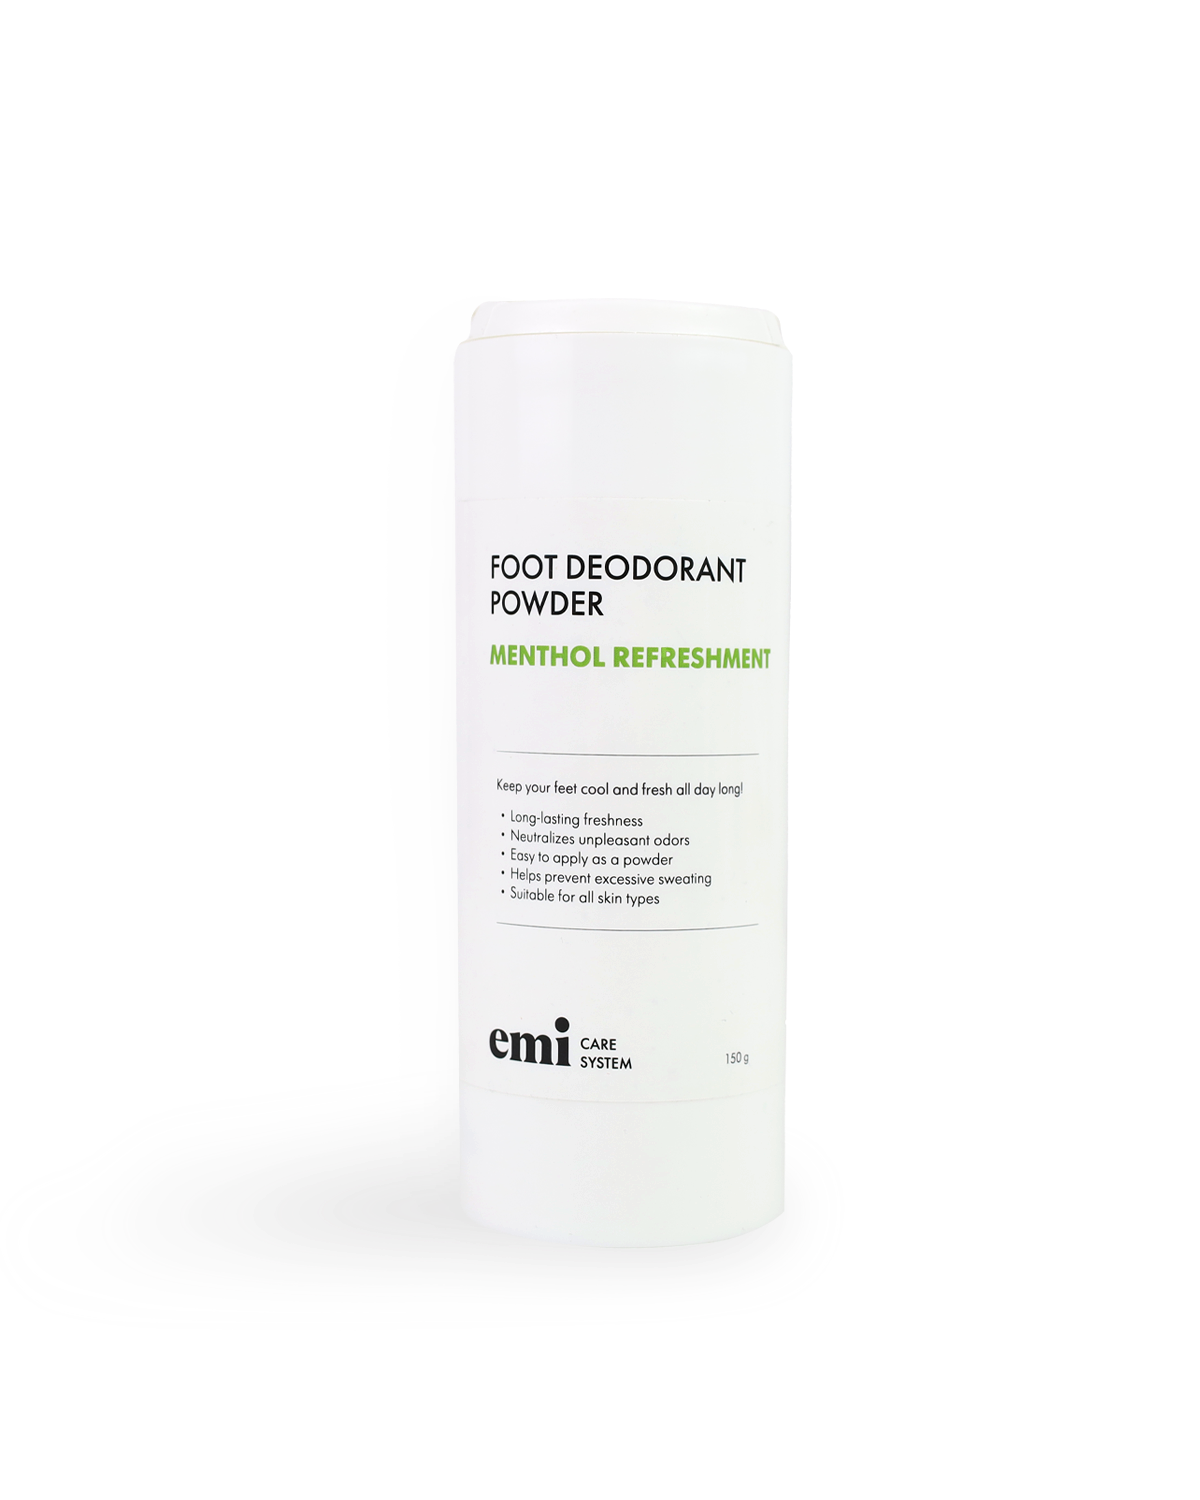 Foot deodorant powder 150g